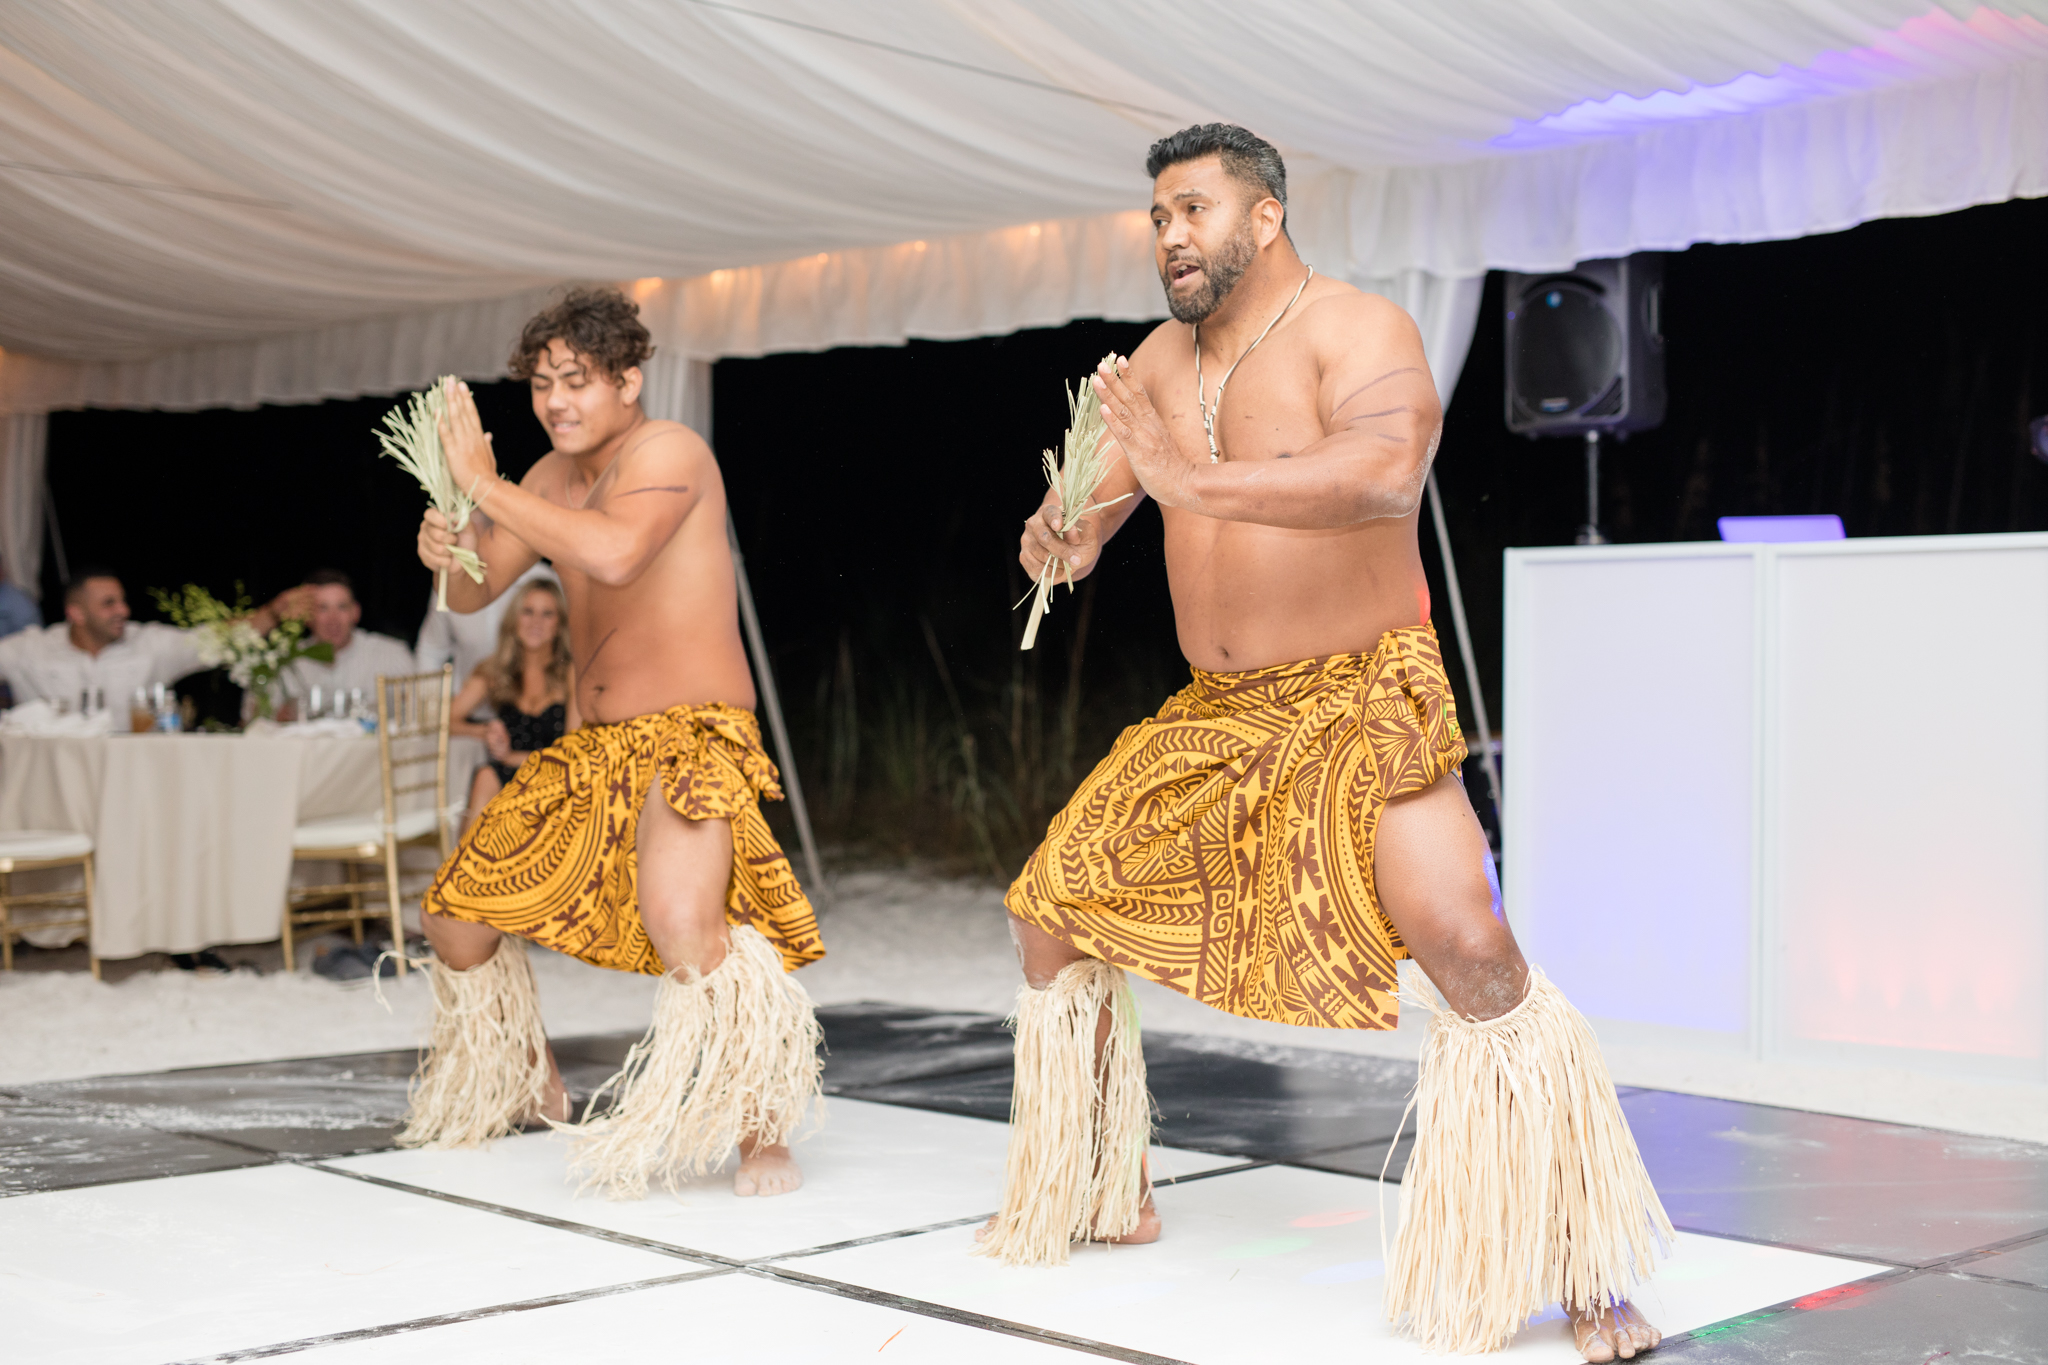 Samoan dancers entertain wedding guests.